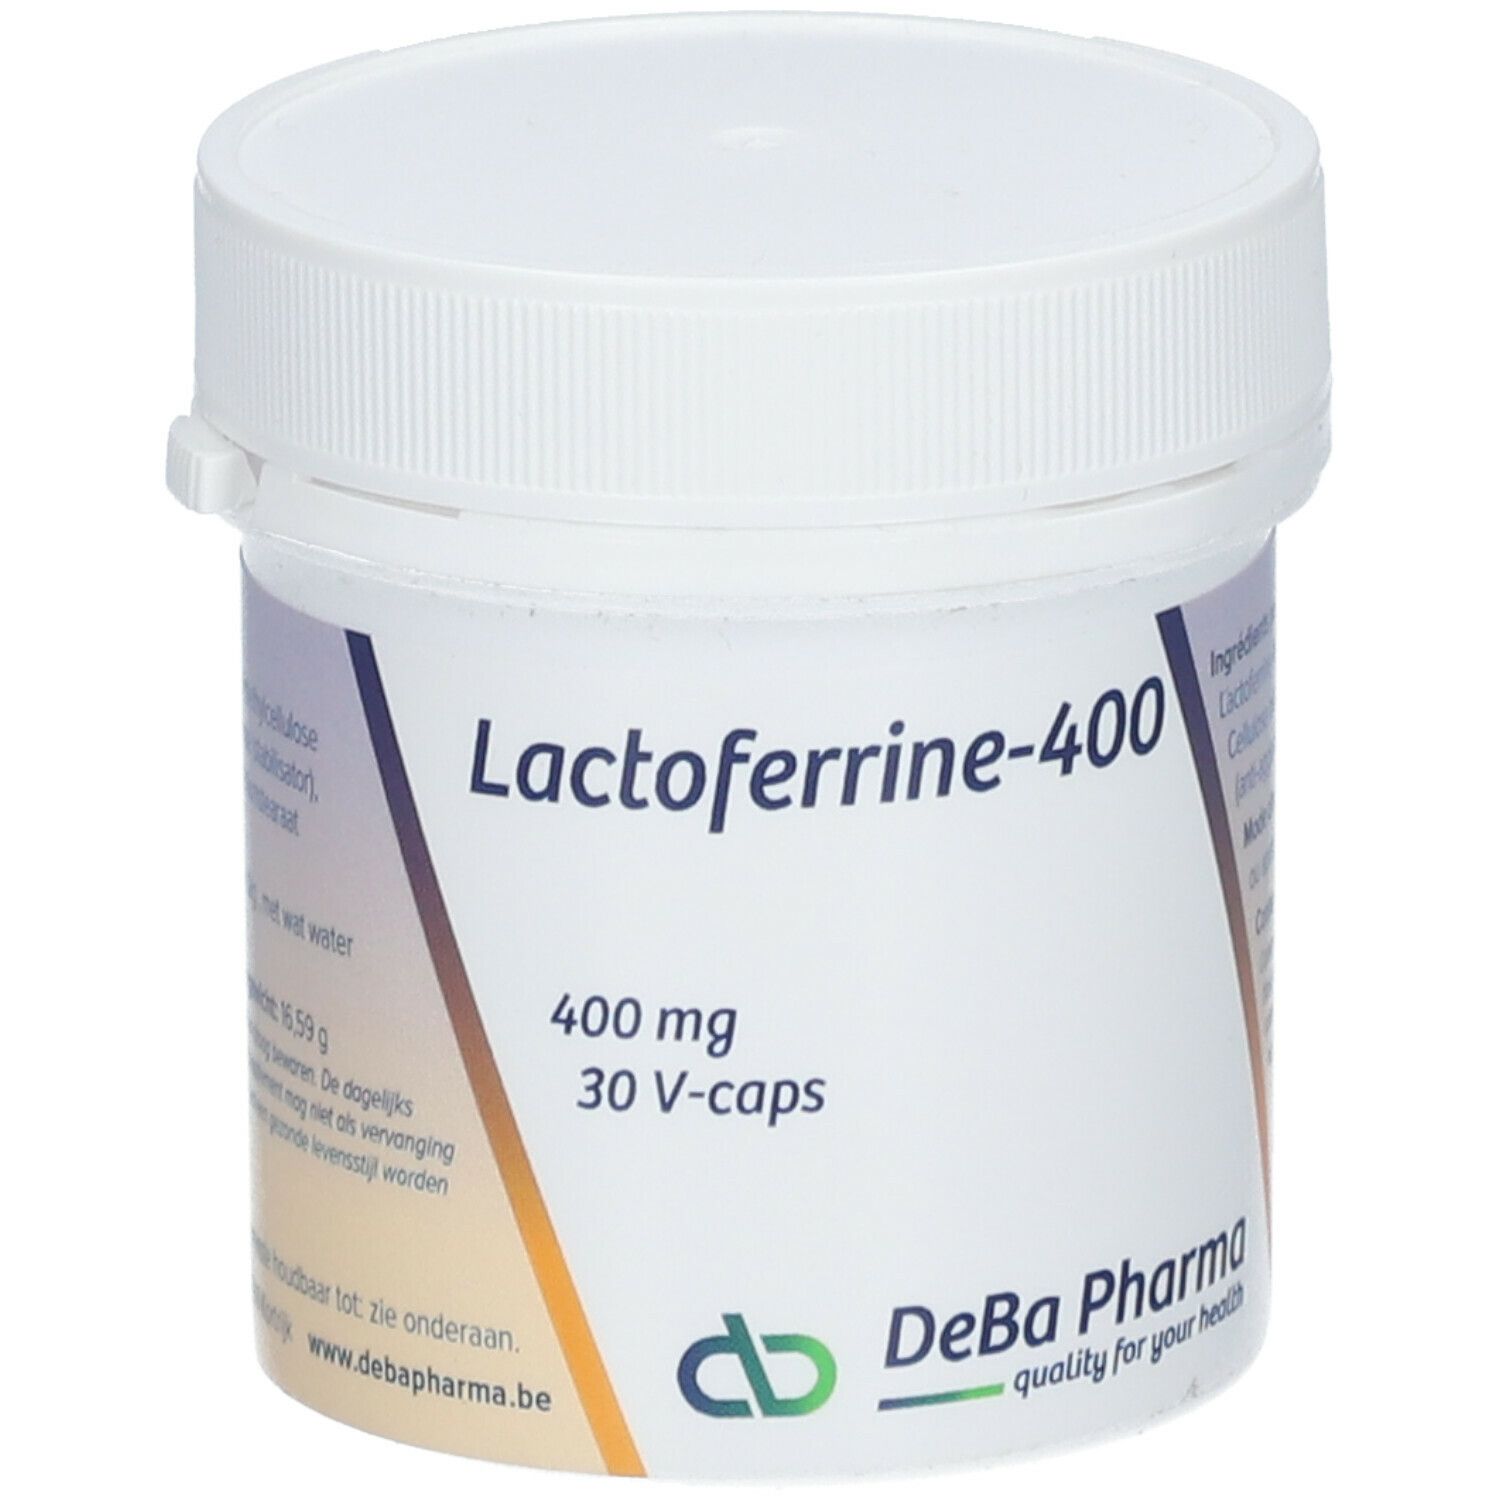 DeBa Pharma Lactoferrine 400 mg